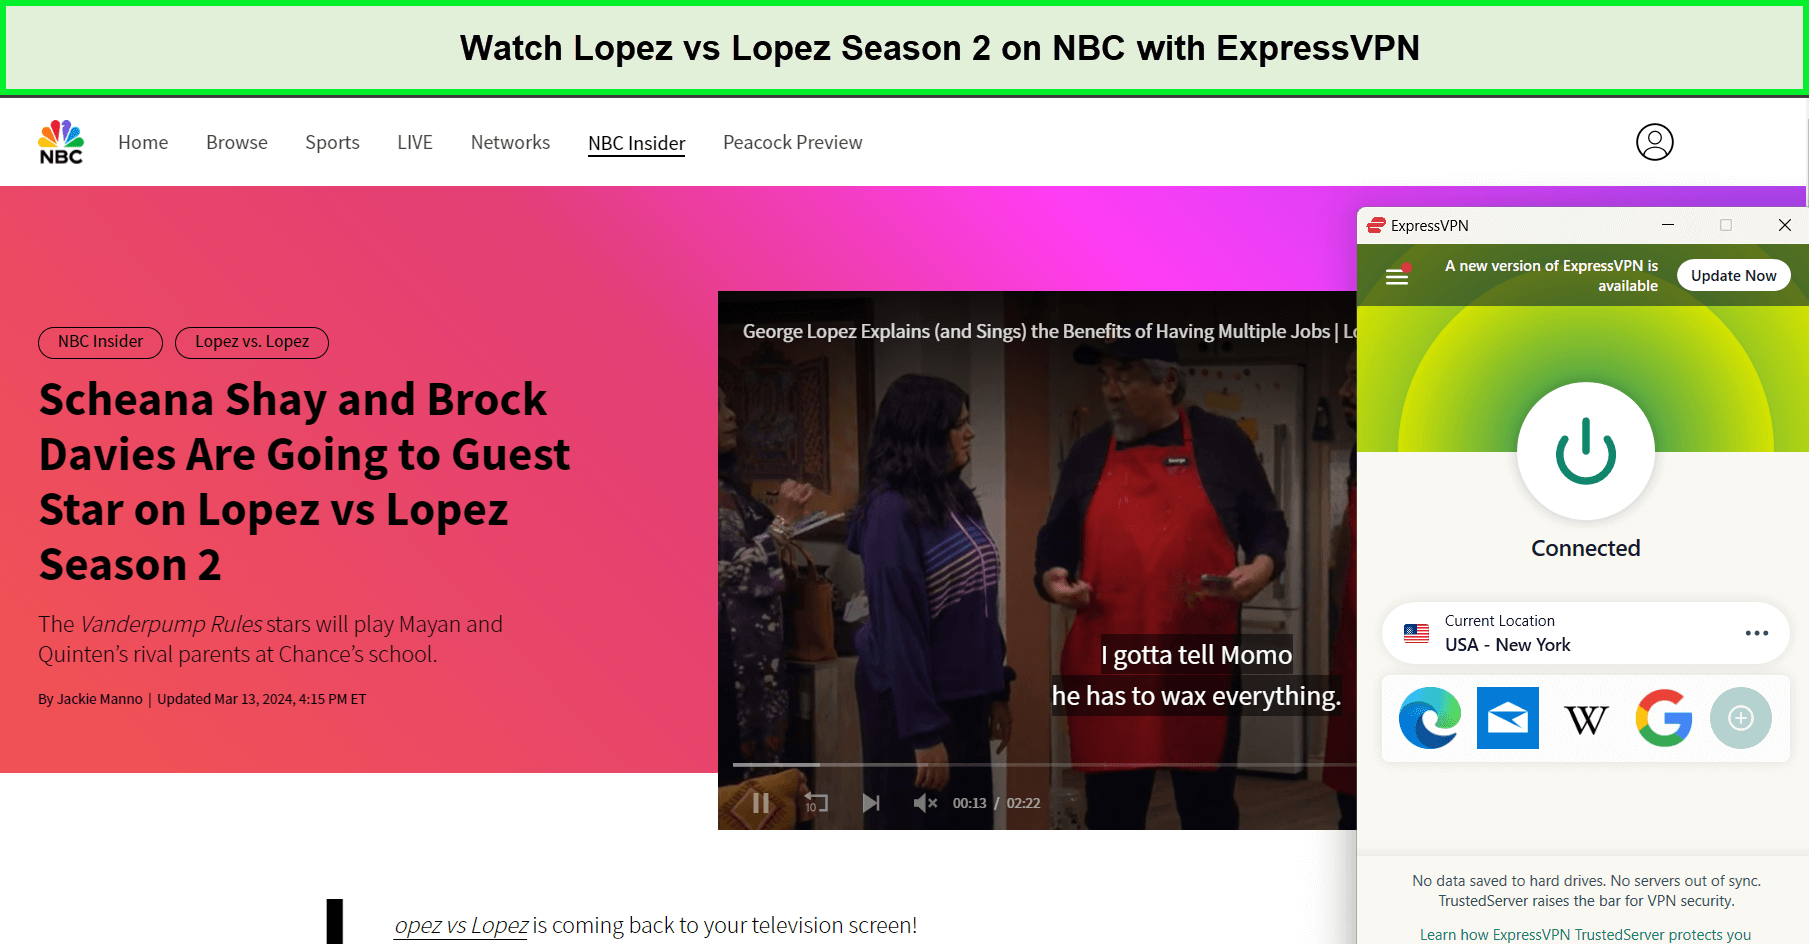 Watch-Lopez-vs-Lopez-Season-2-in-Australia-on-NBC